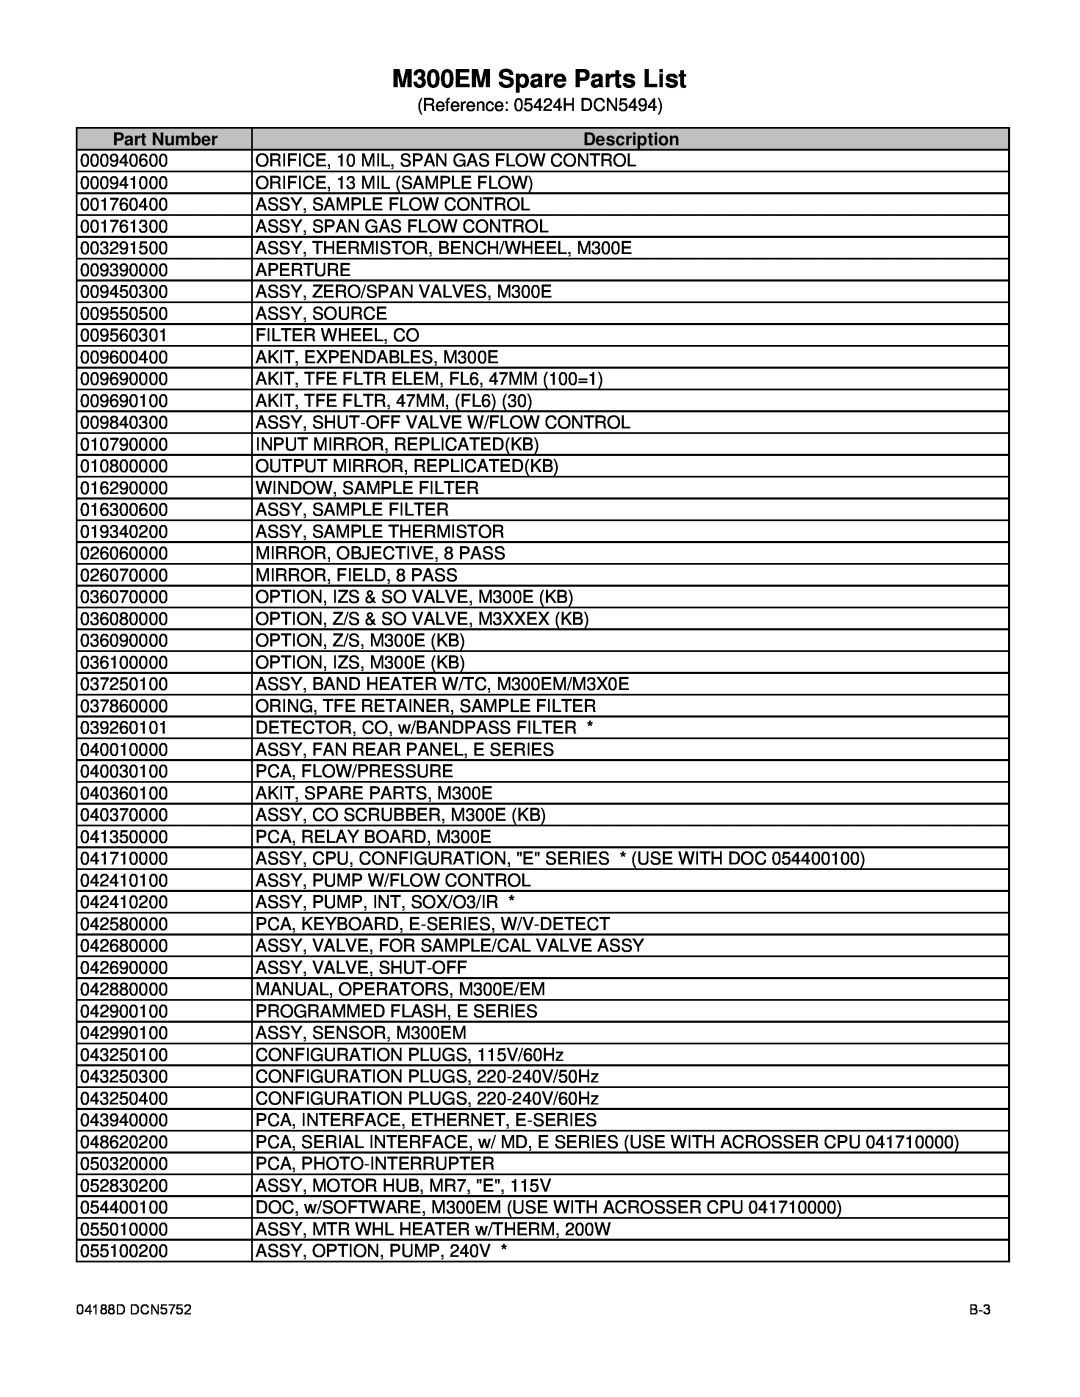 Teledyne operation manual M300EM Spare Parts List, Part Number, Description 